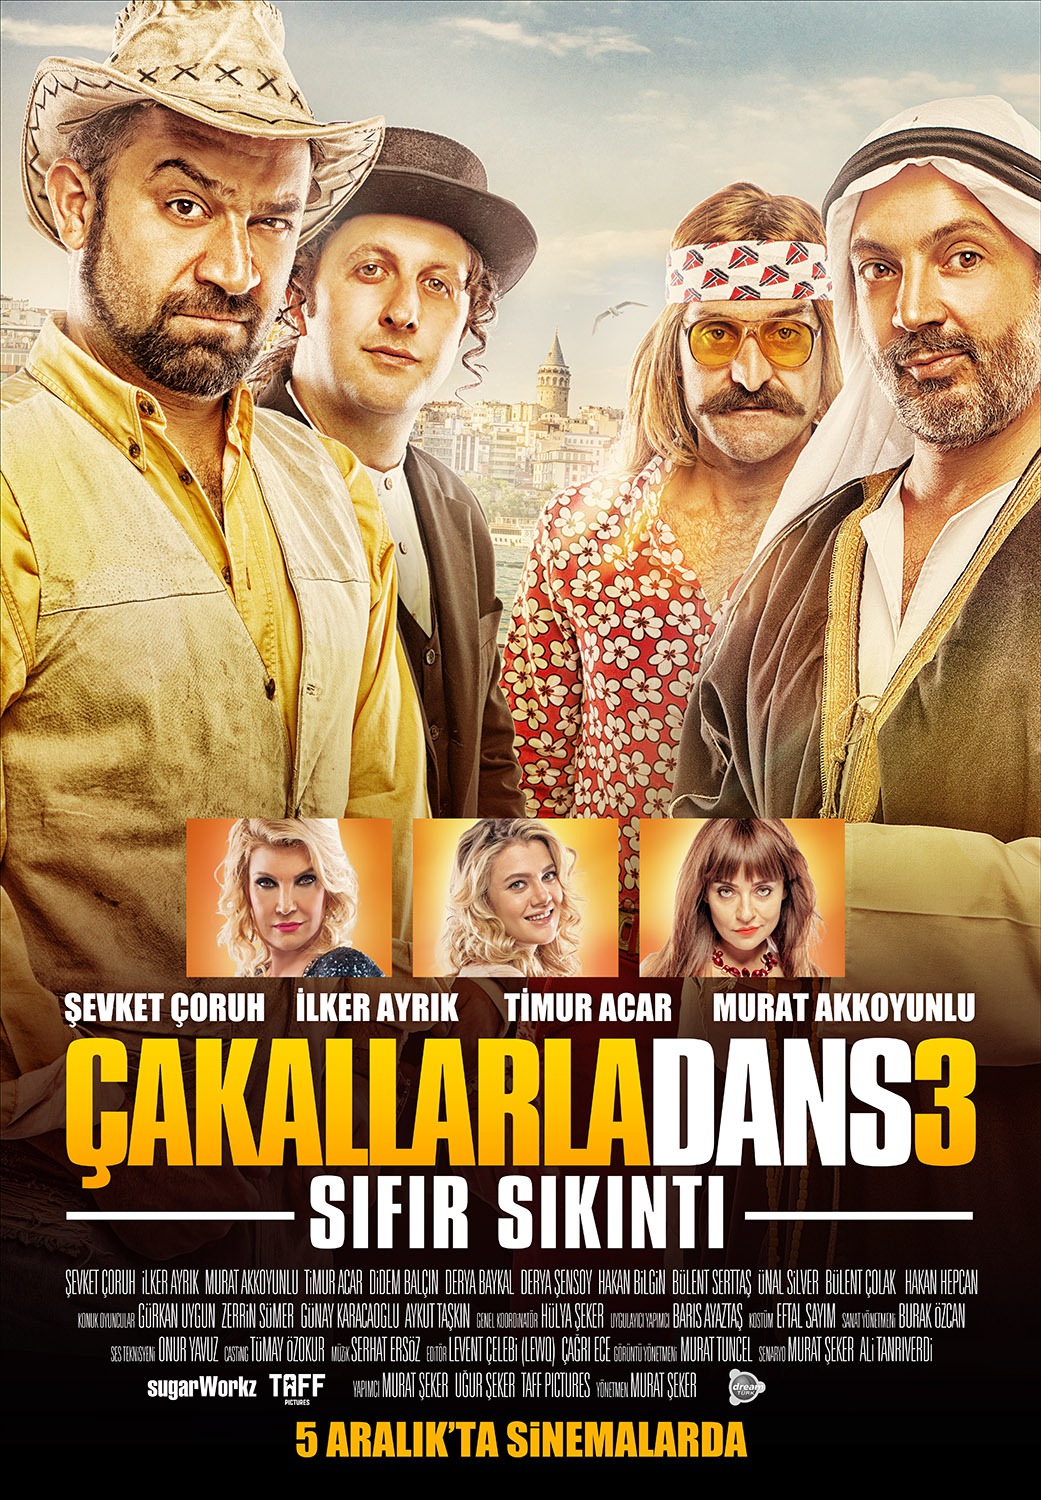 Extra Large Movie Poster Image for Çakallarla Dans 3: Sifir Sikinti (#9 of 9)